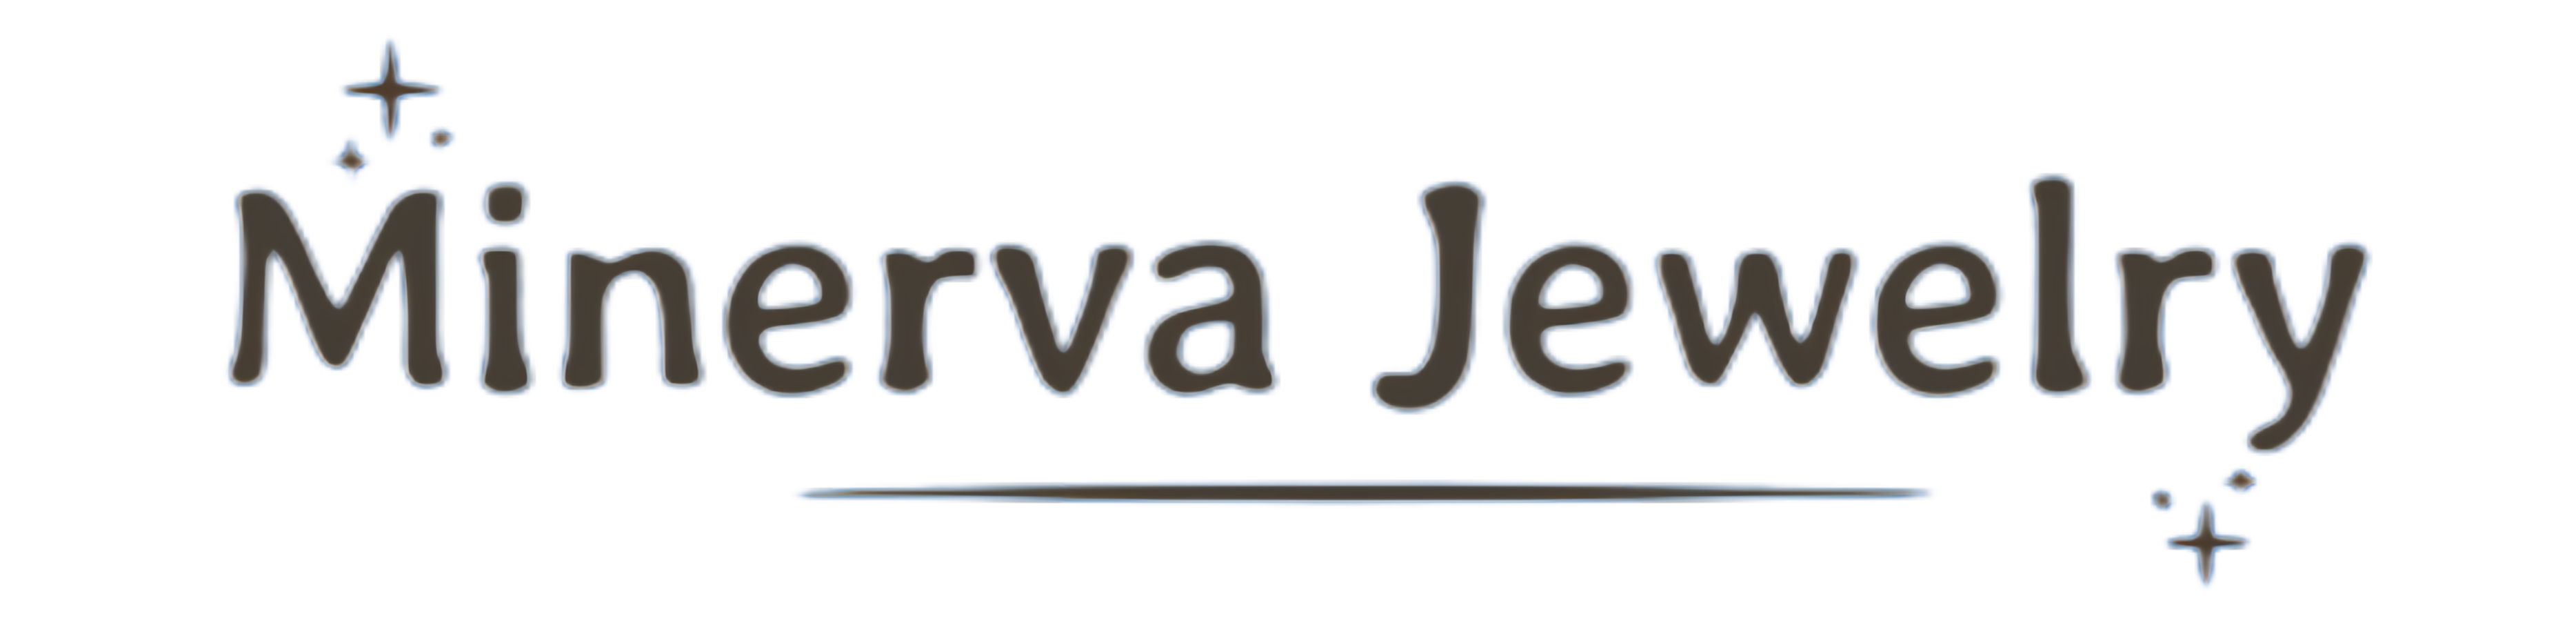 Minerva Jewelry Logo2